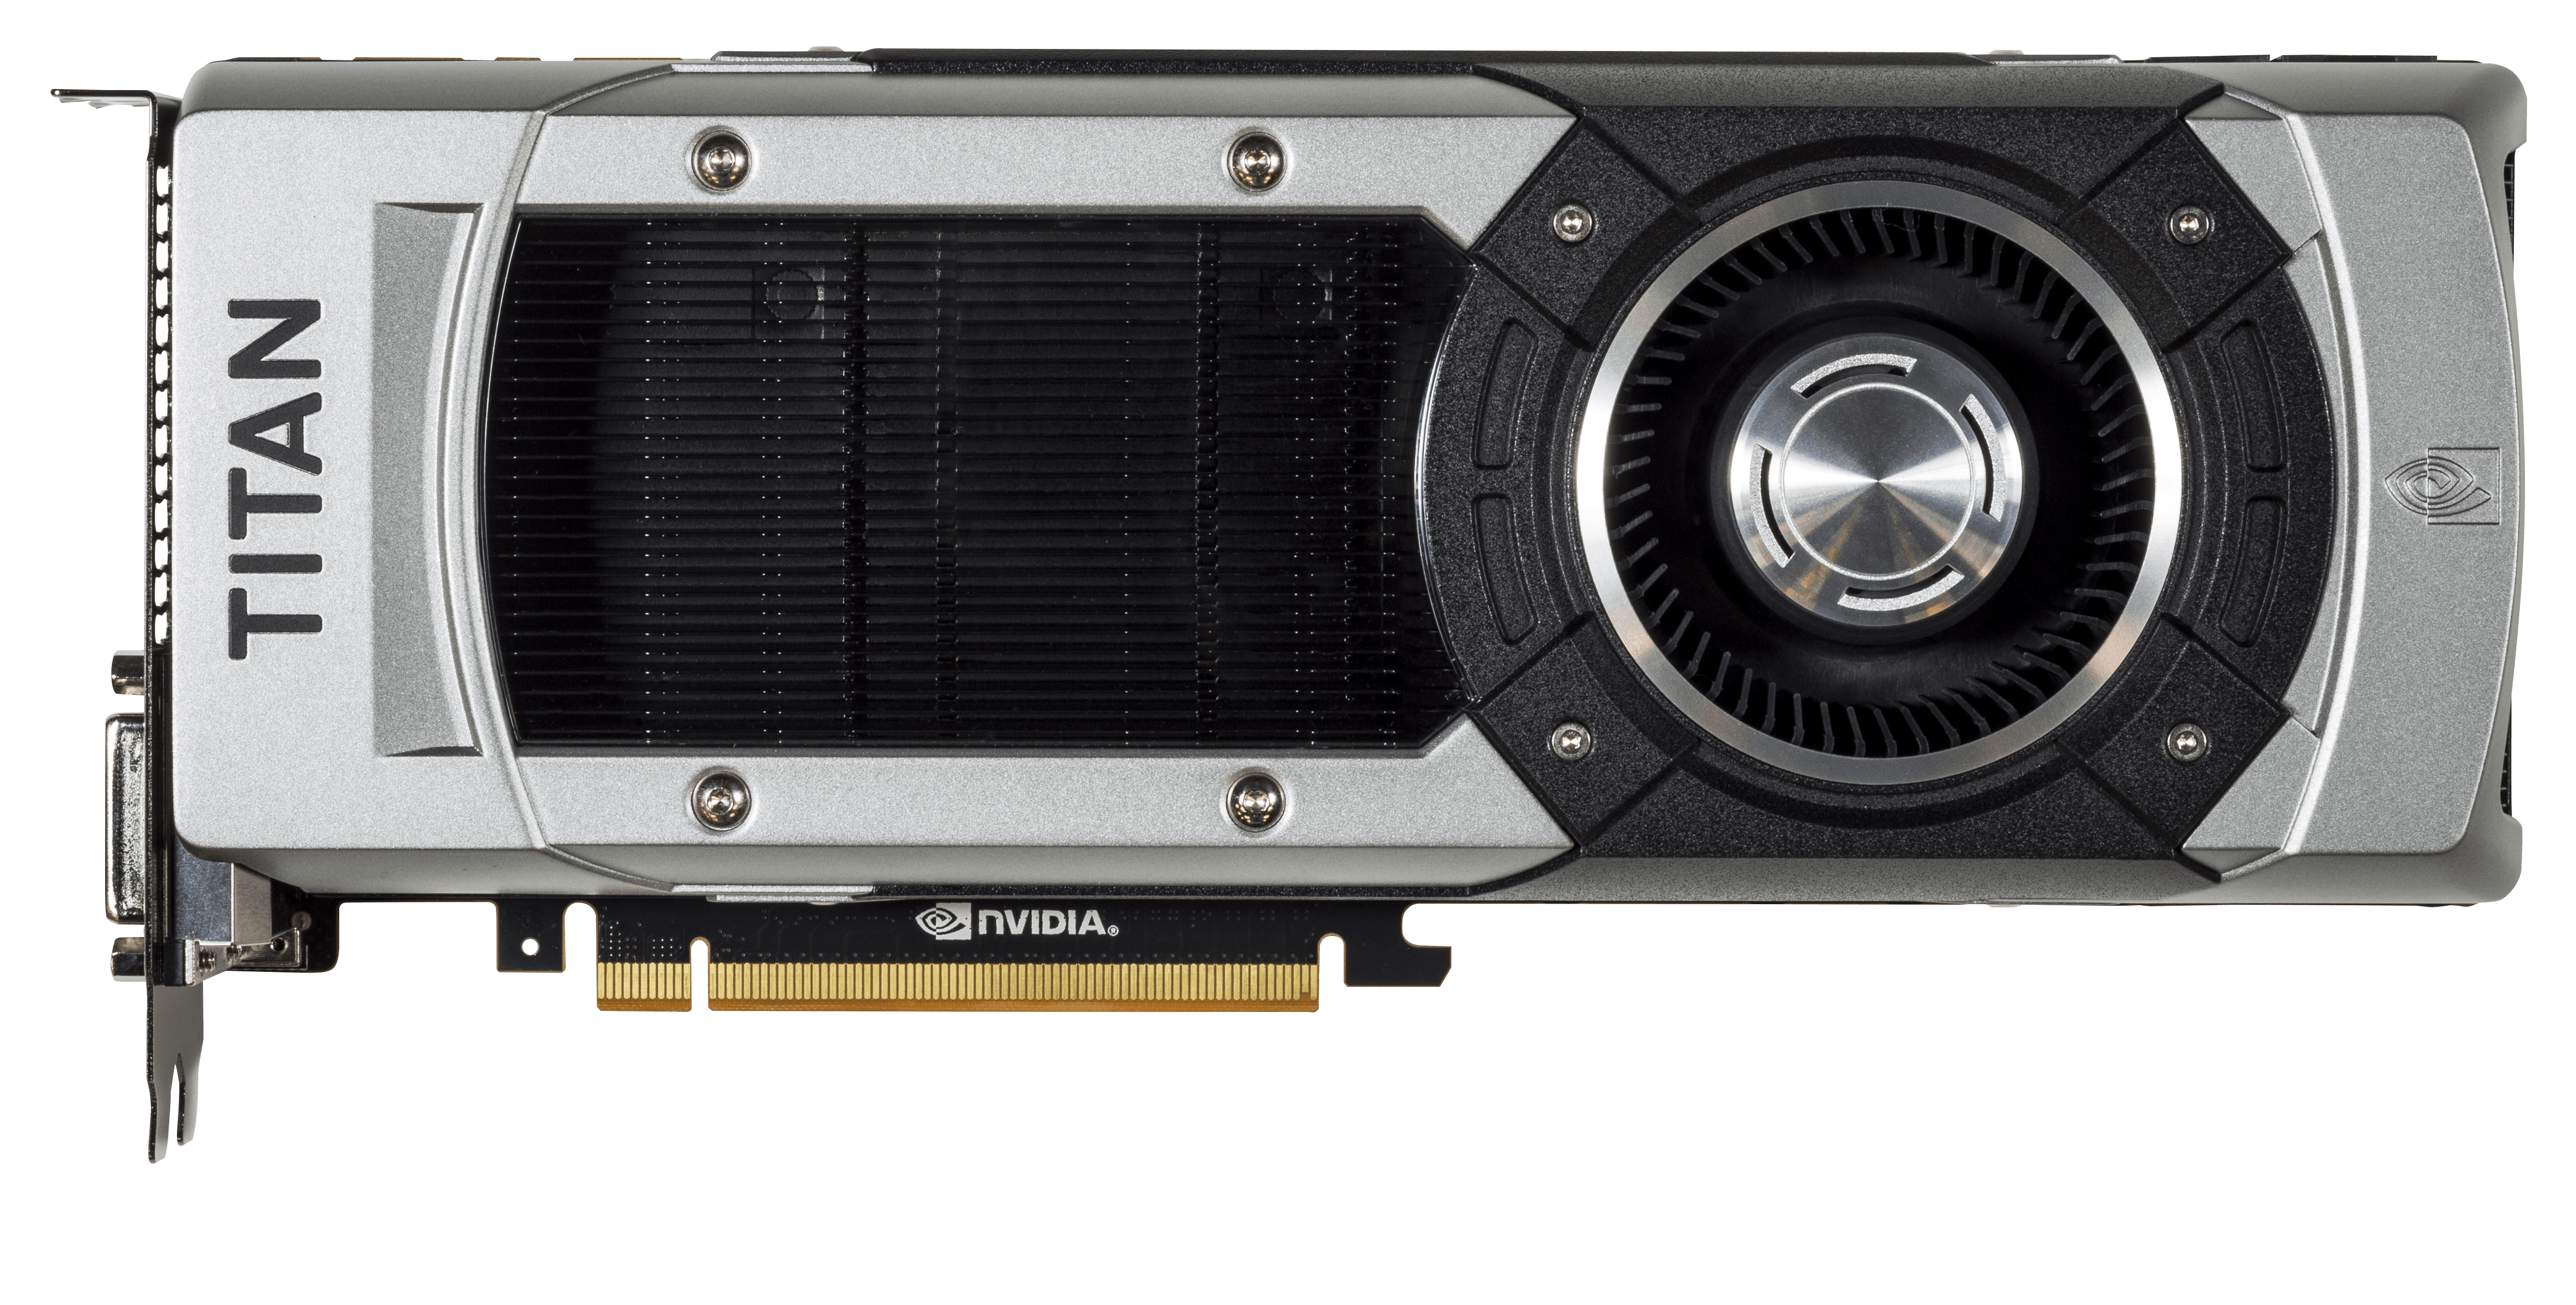 Asus NVIDIA GeForce GTX TITAN BLACK Graphic Card, GB GDDR5